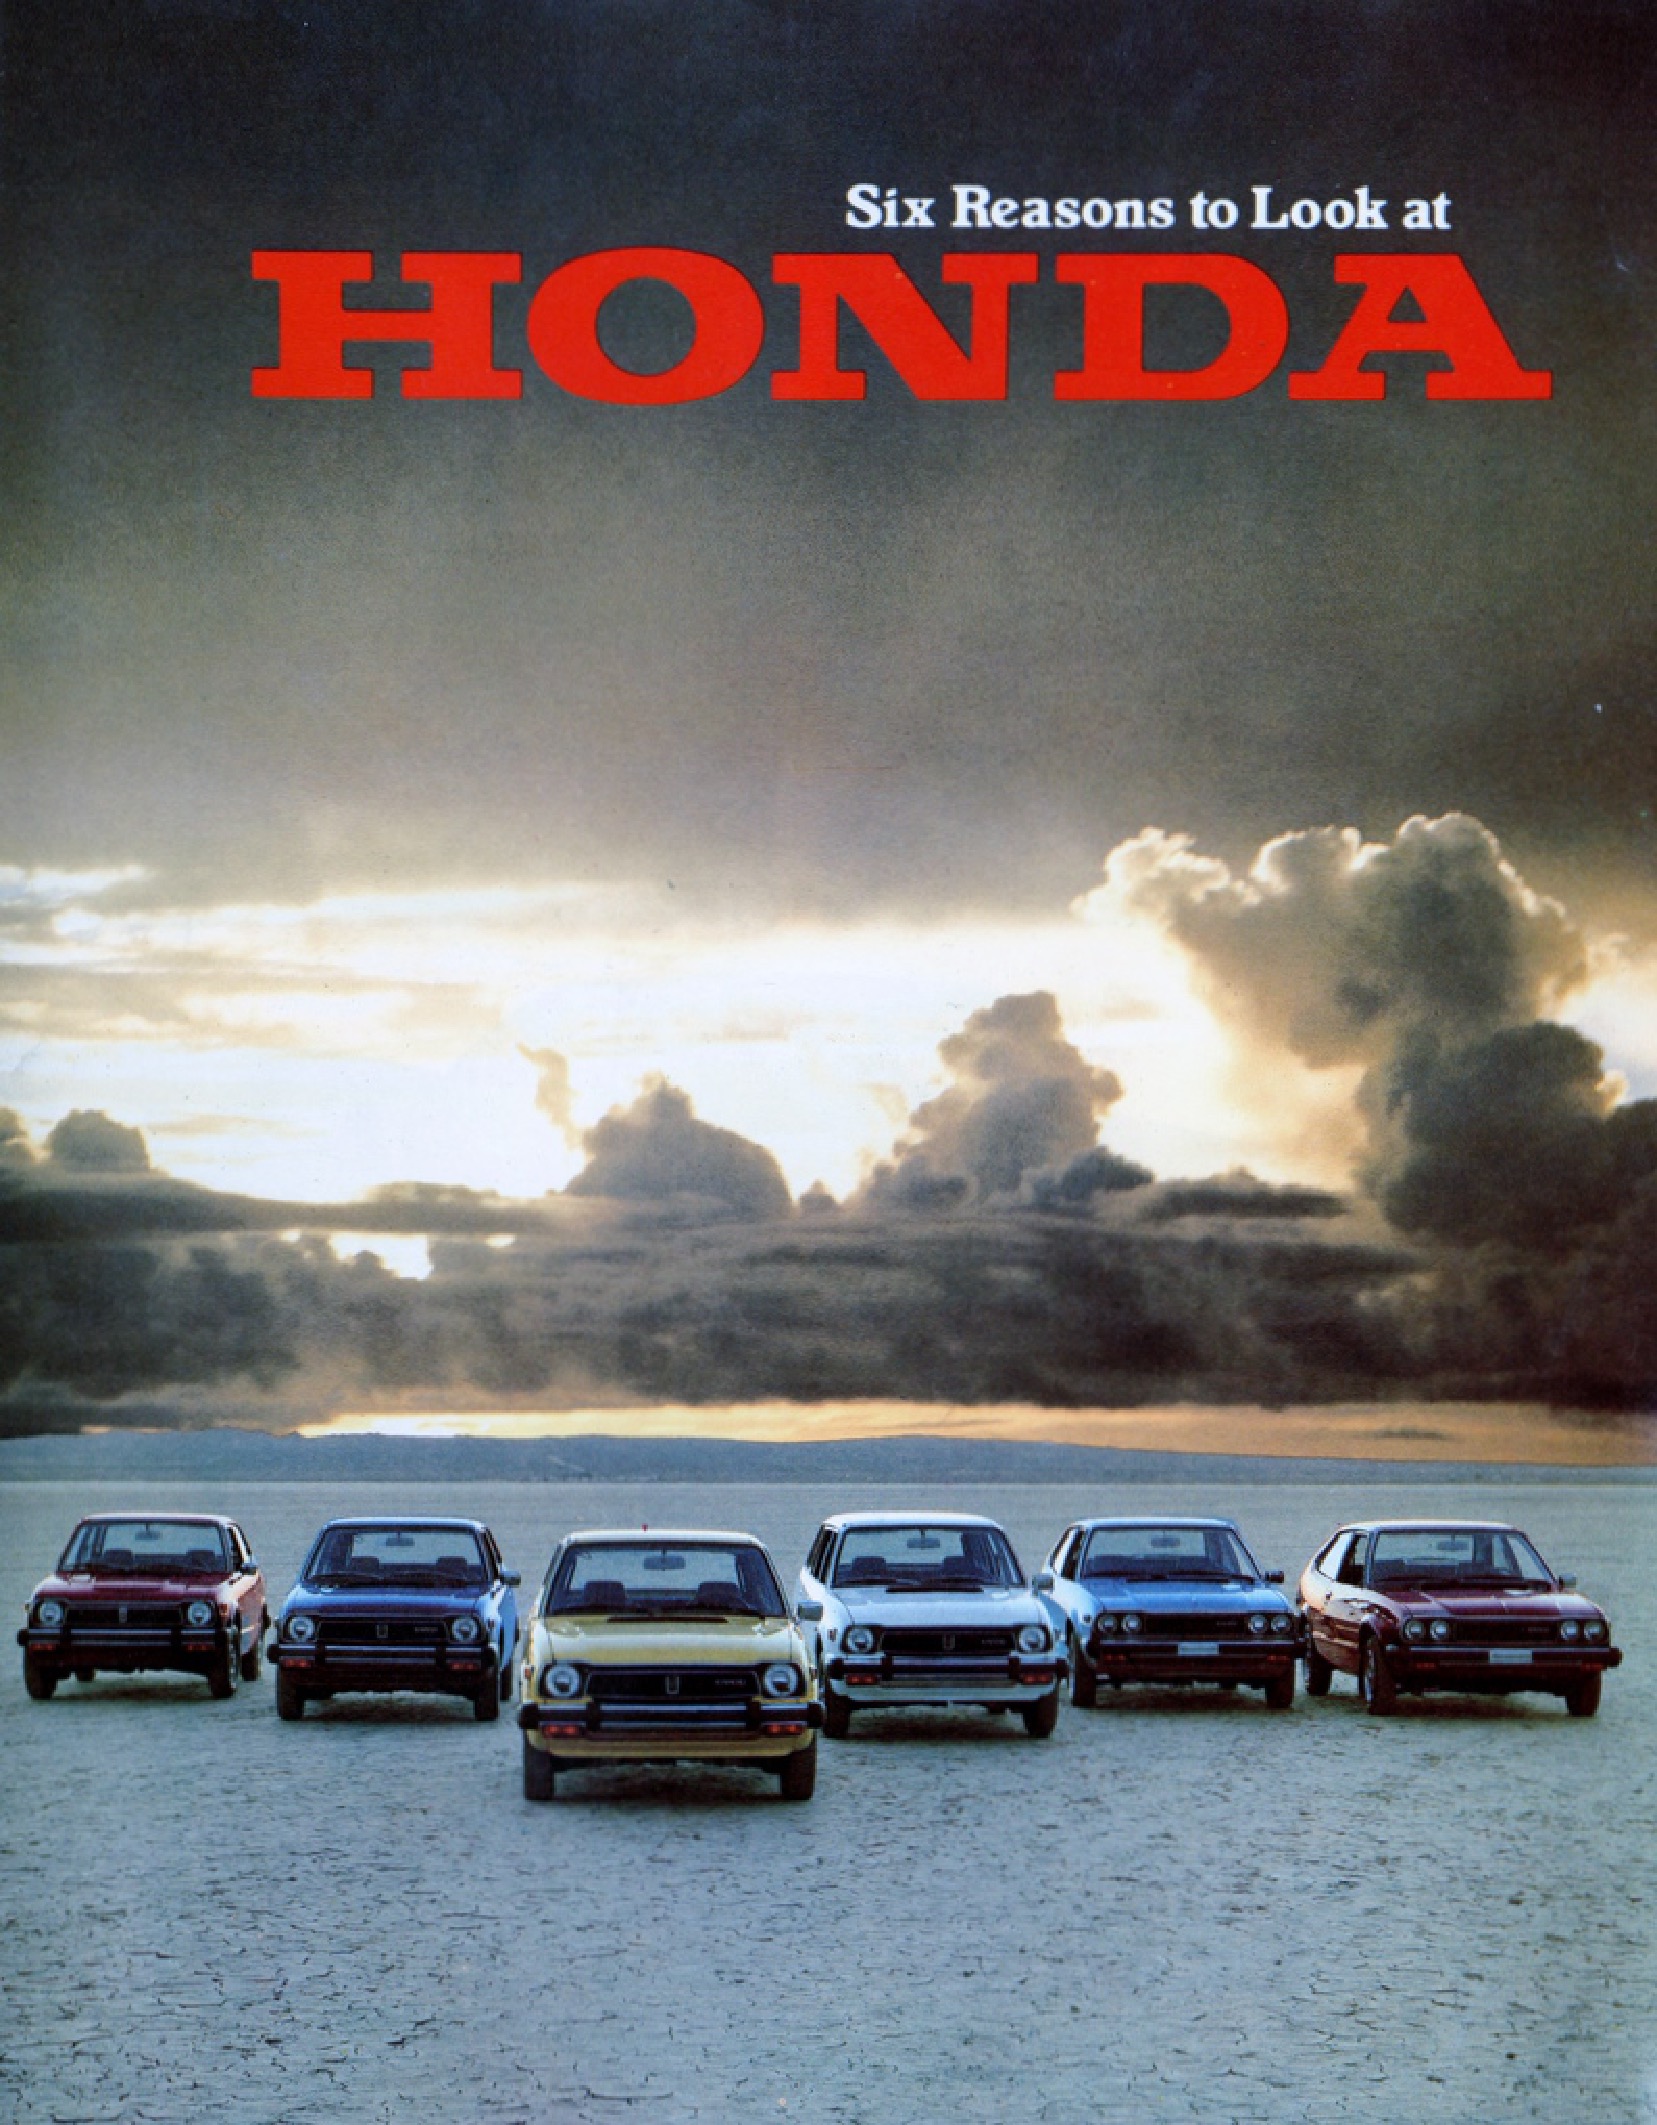 1978 Honda Model Range Brochure